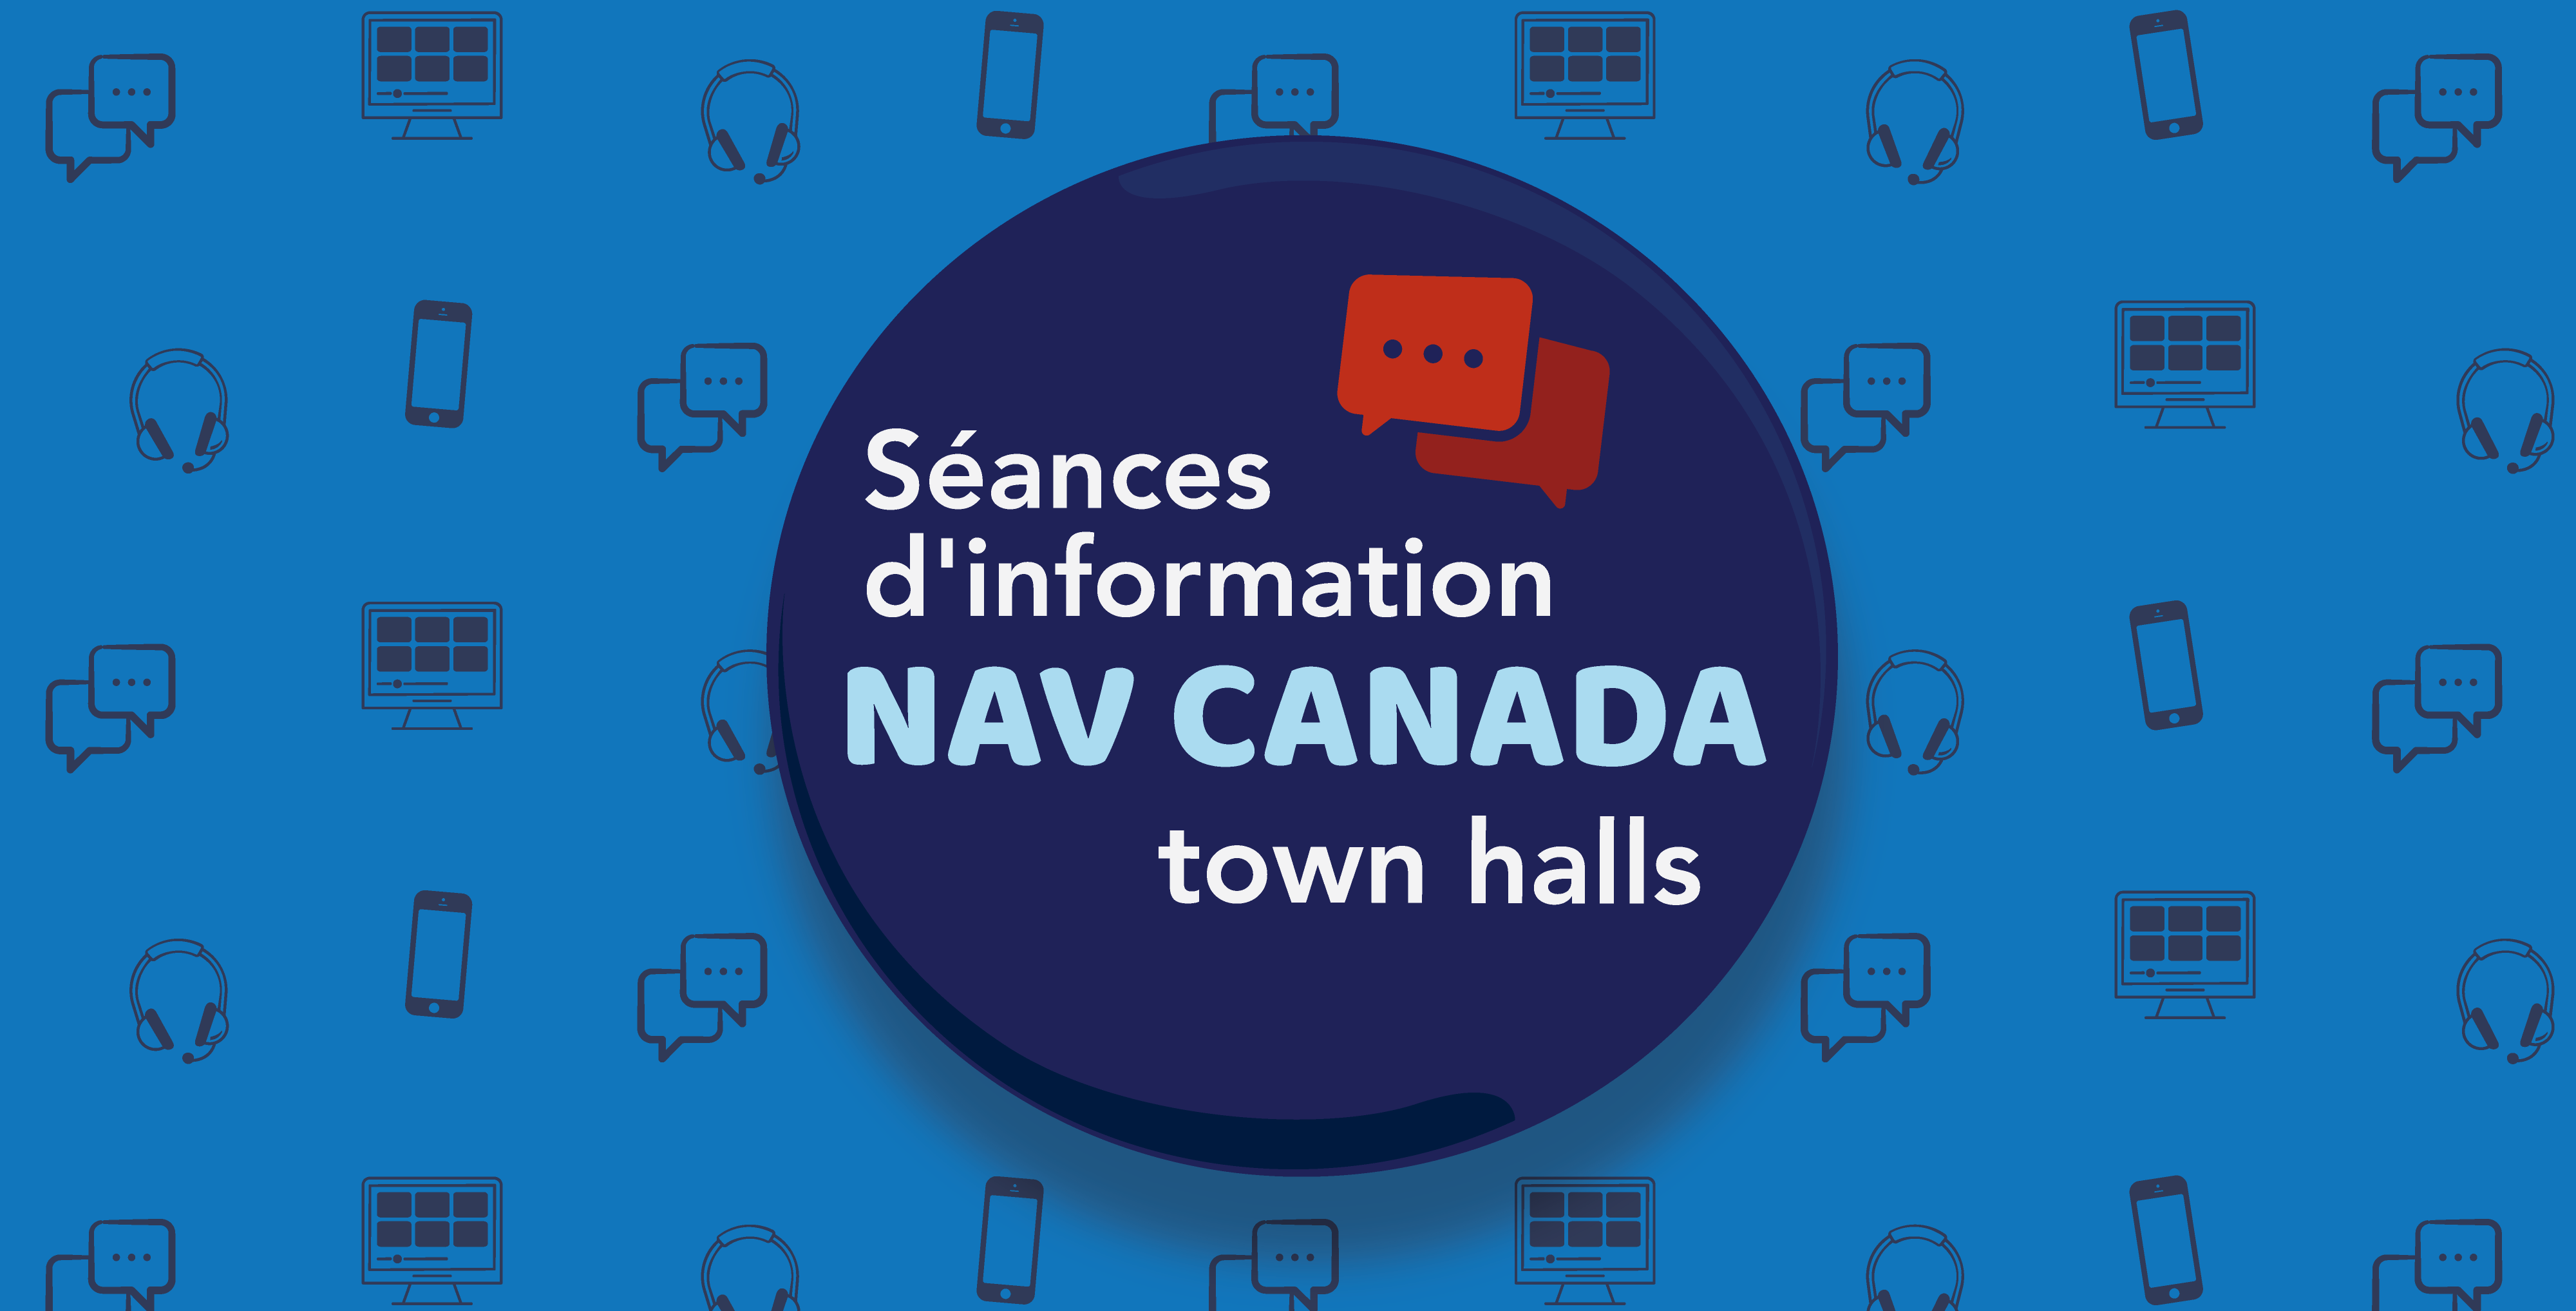 NAV CANADA: Register for an information session